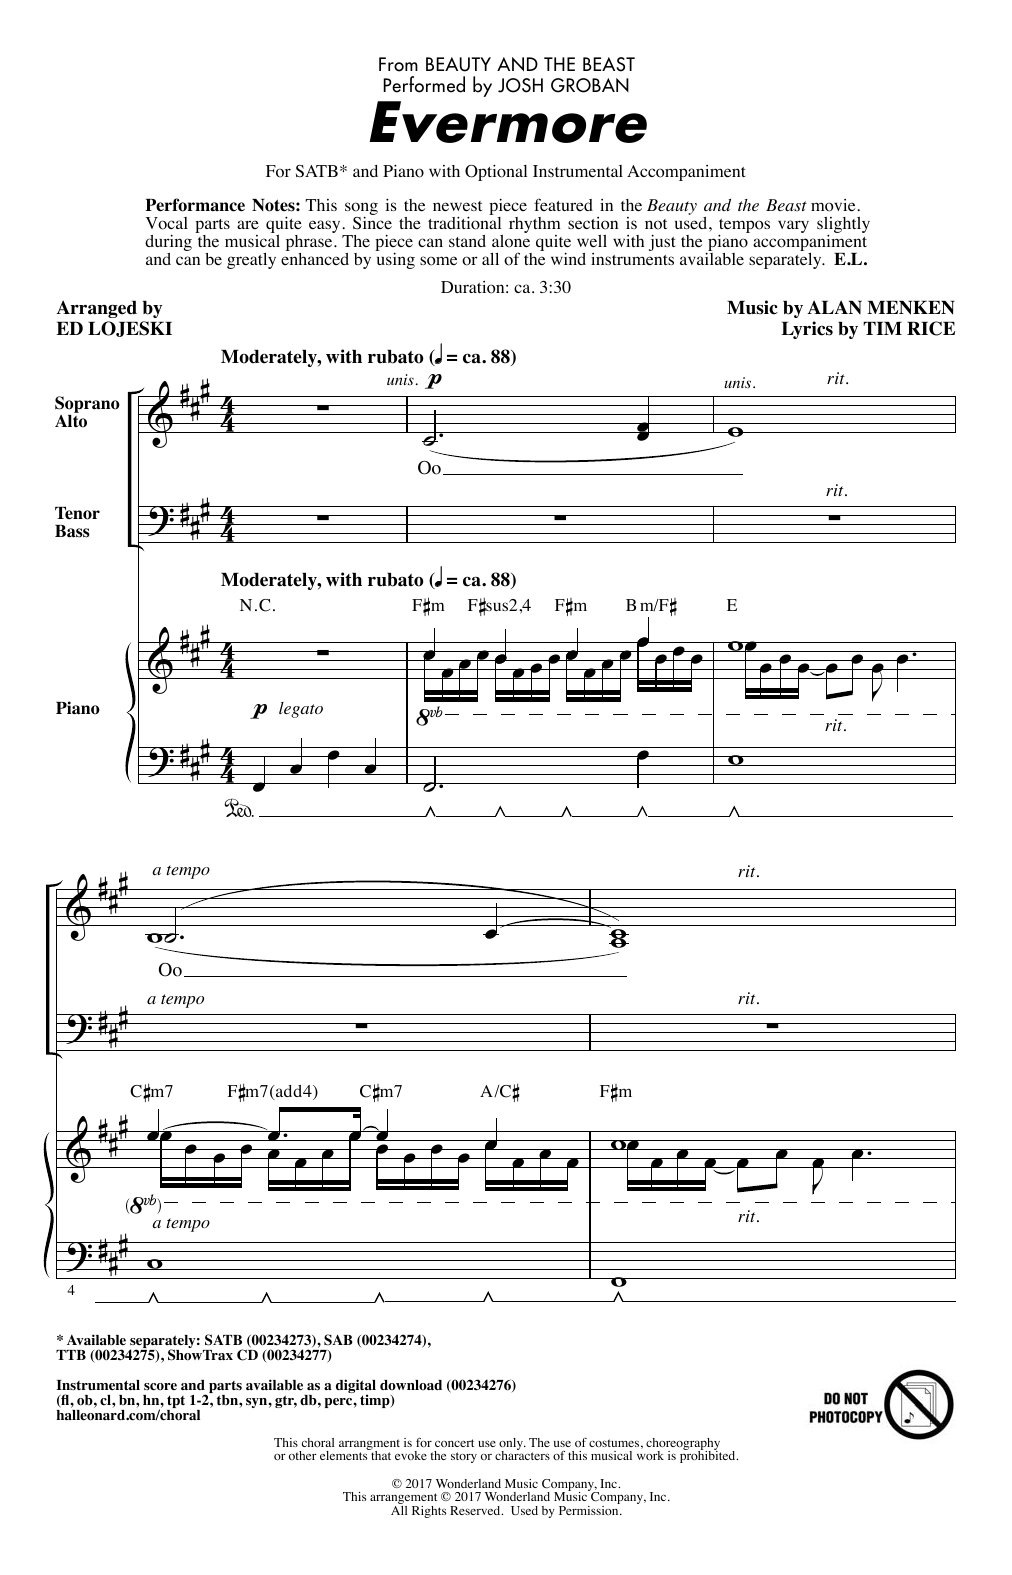 Ed Lojeski Evermore Sheet Music Notes & Chords for SAB - Download or Print PDF